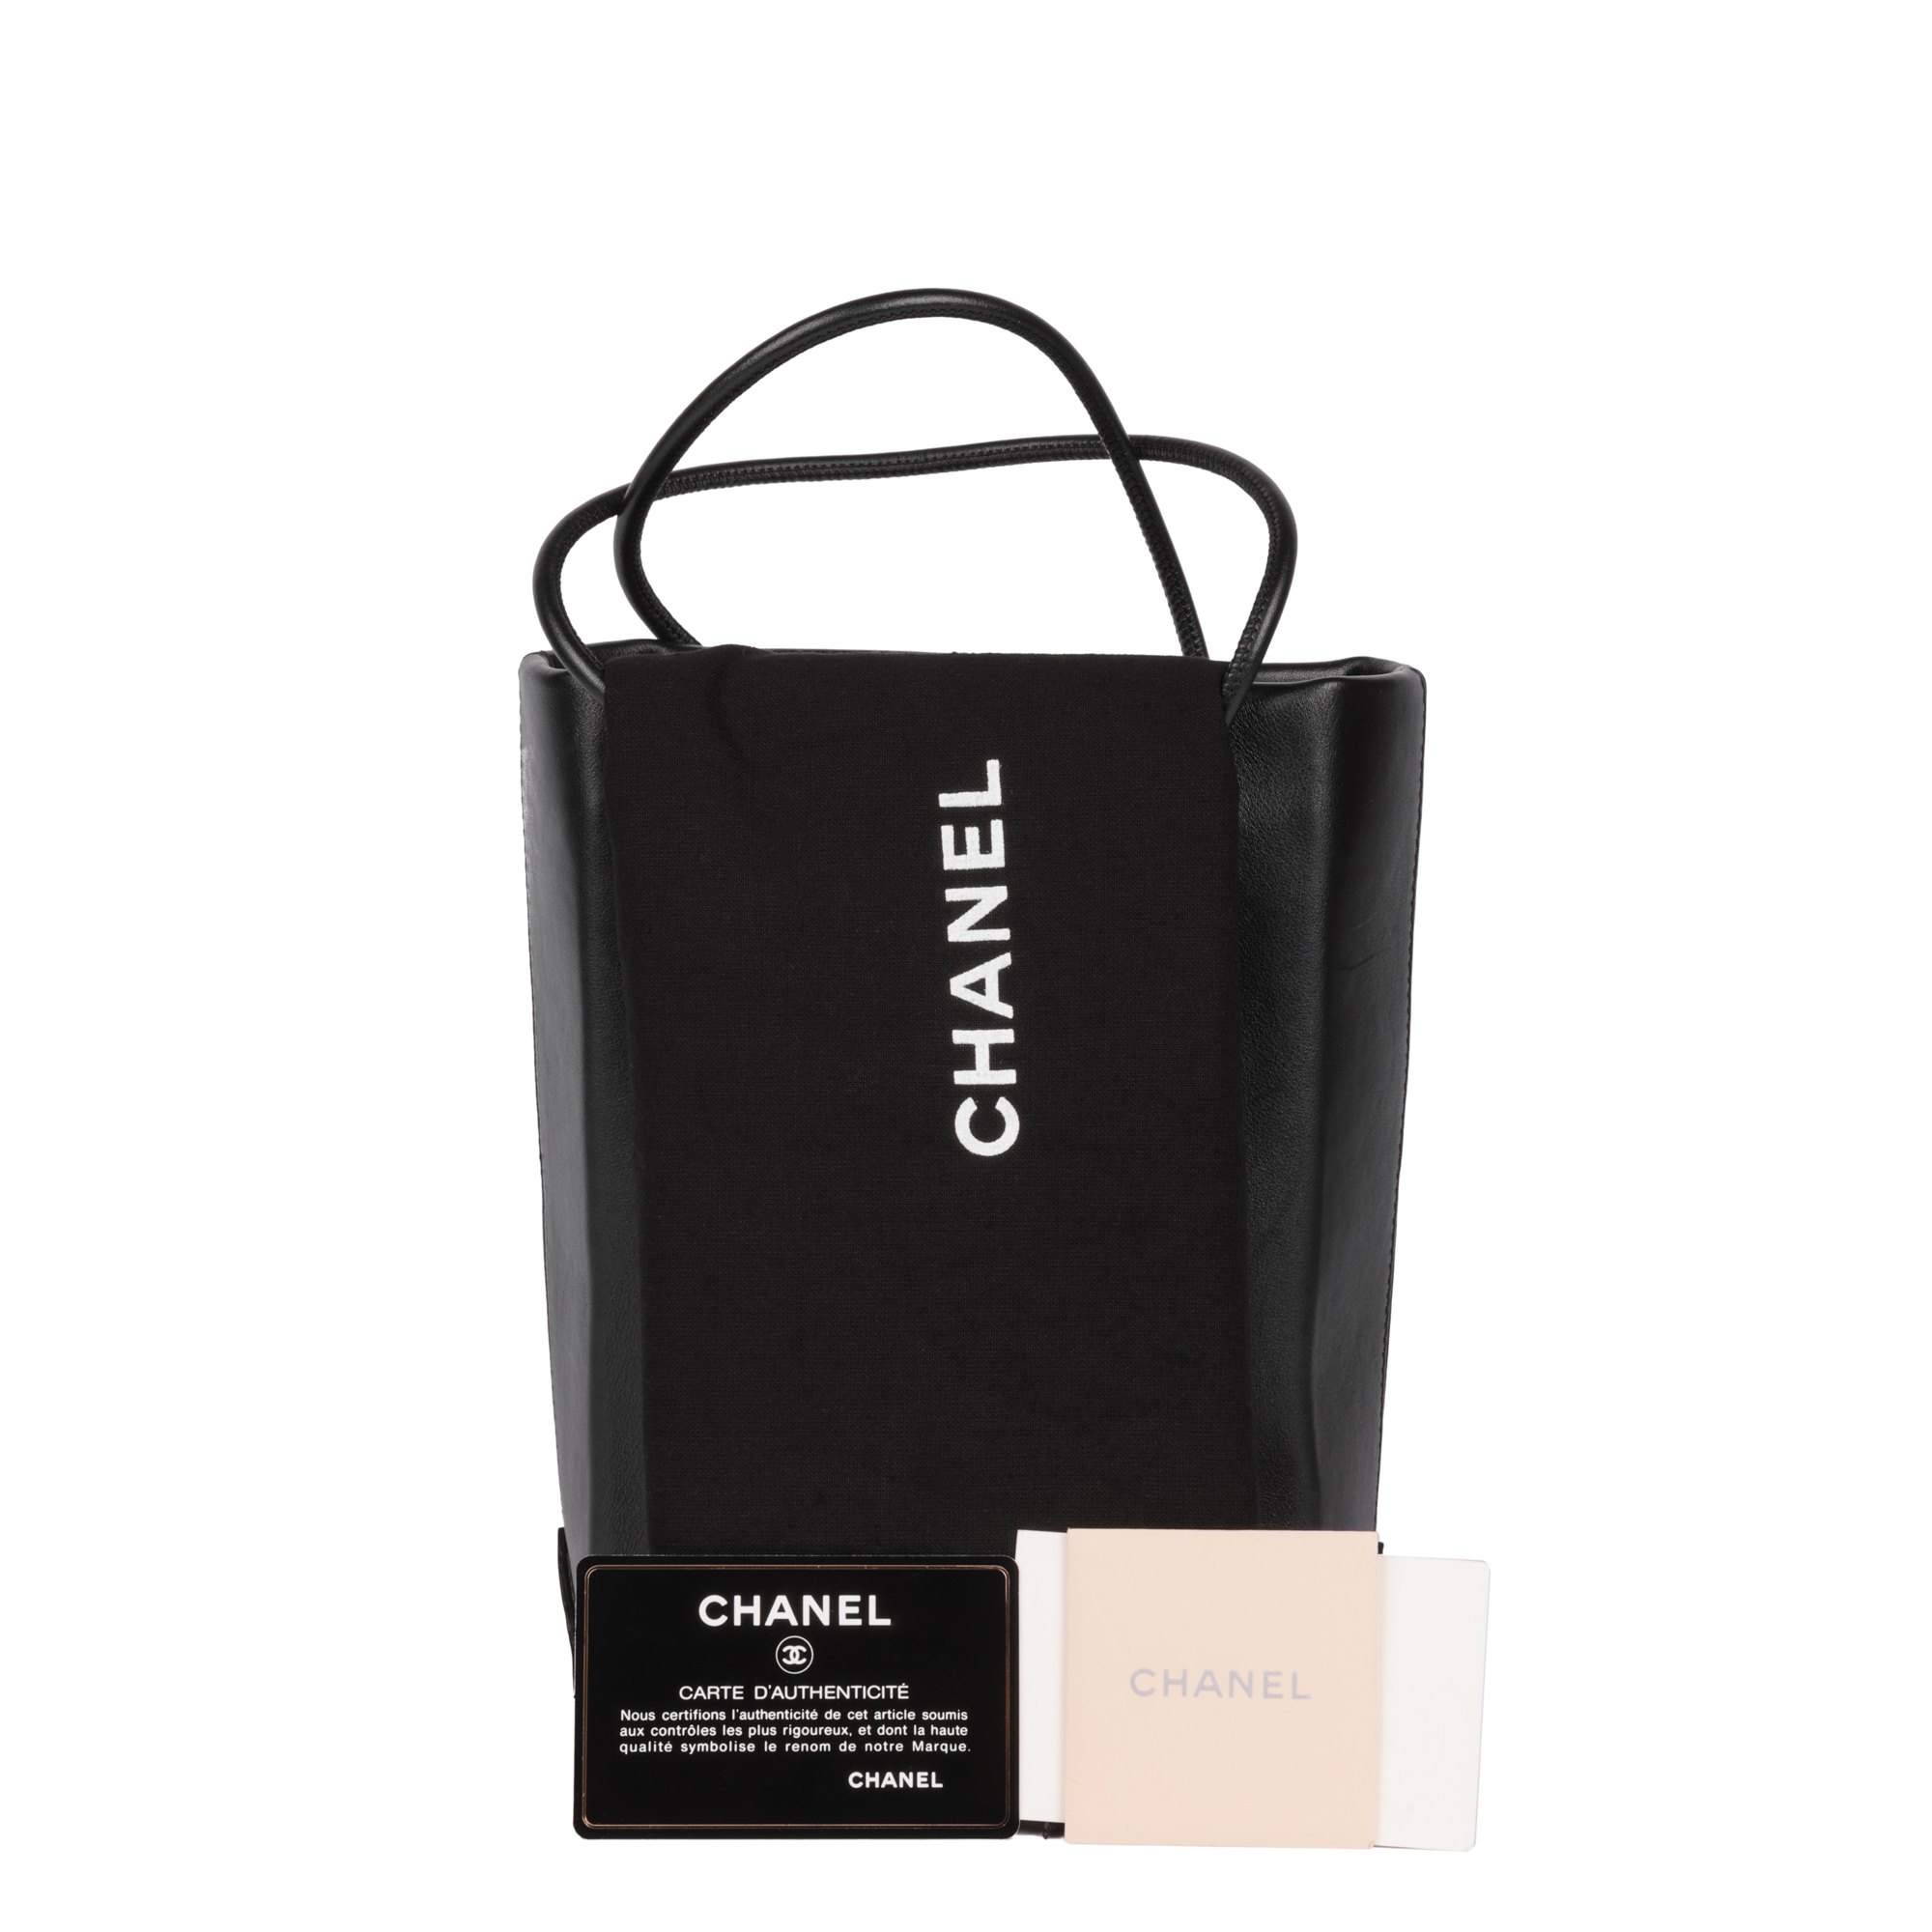 Chanel Black & White Lambskin Mini Shopping Bag Tote